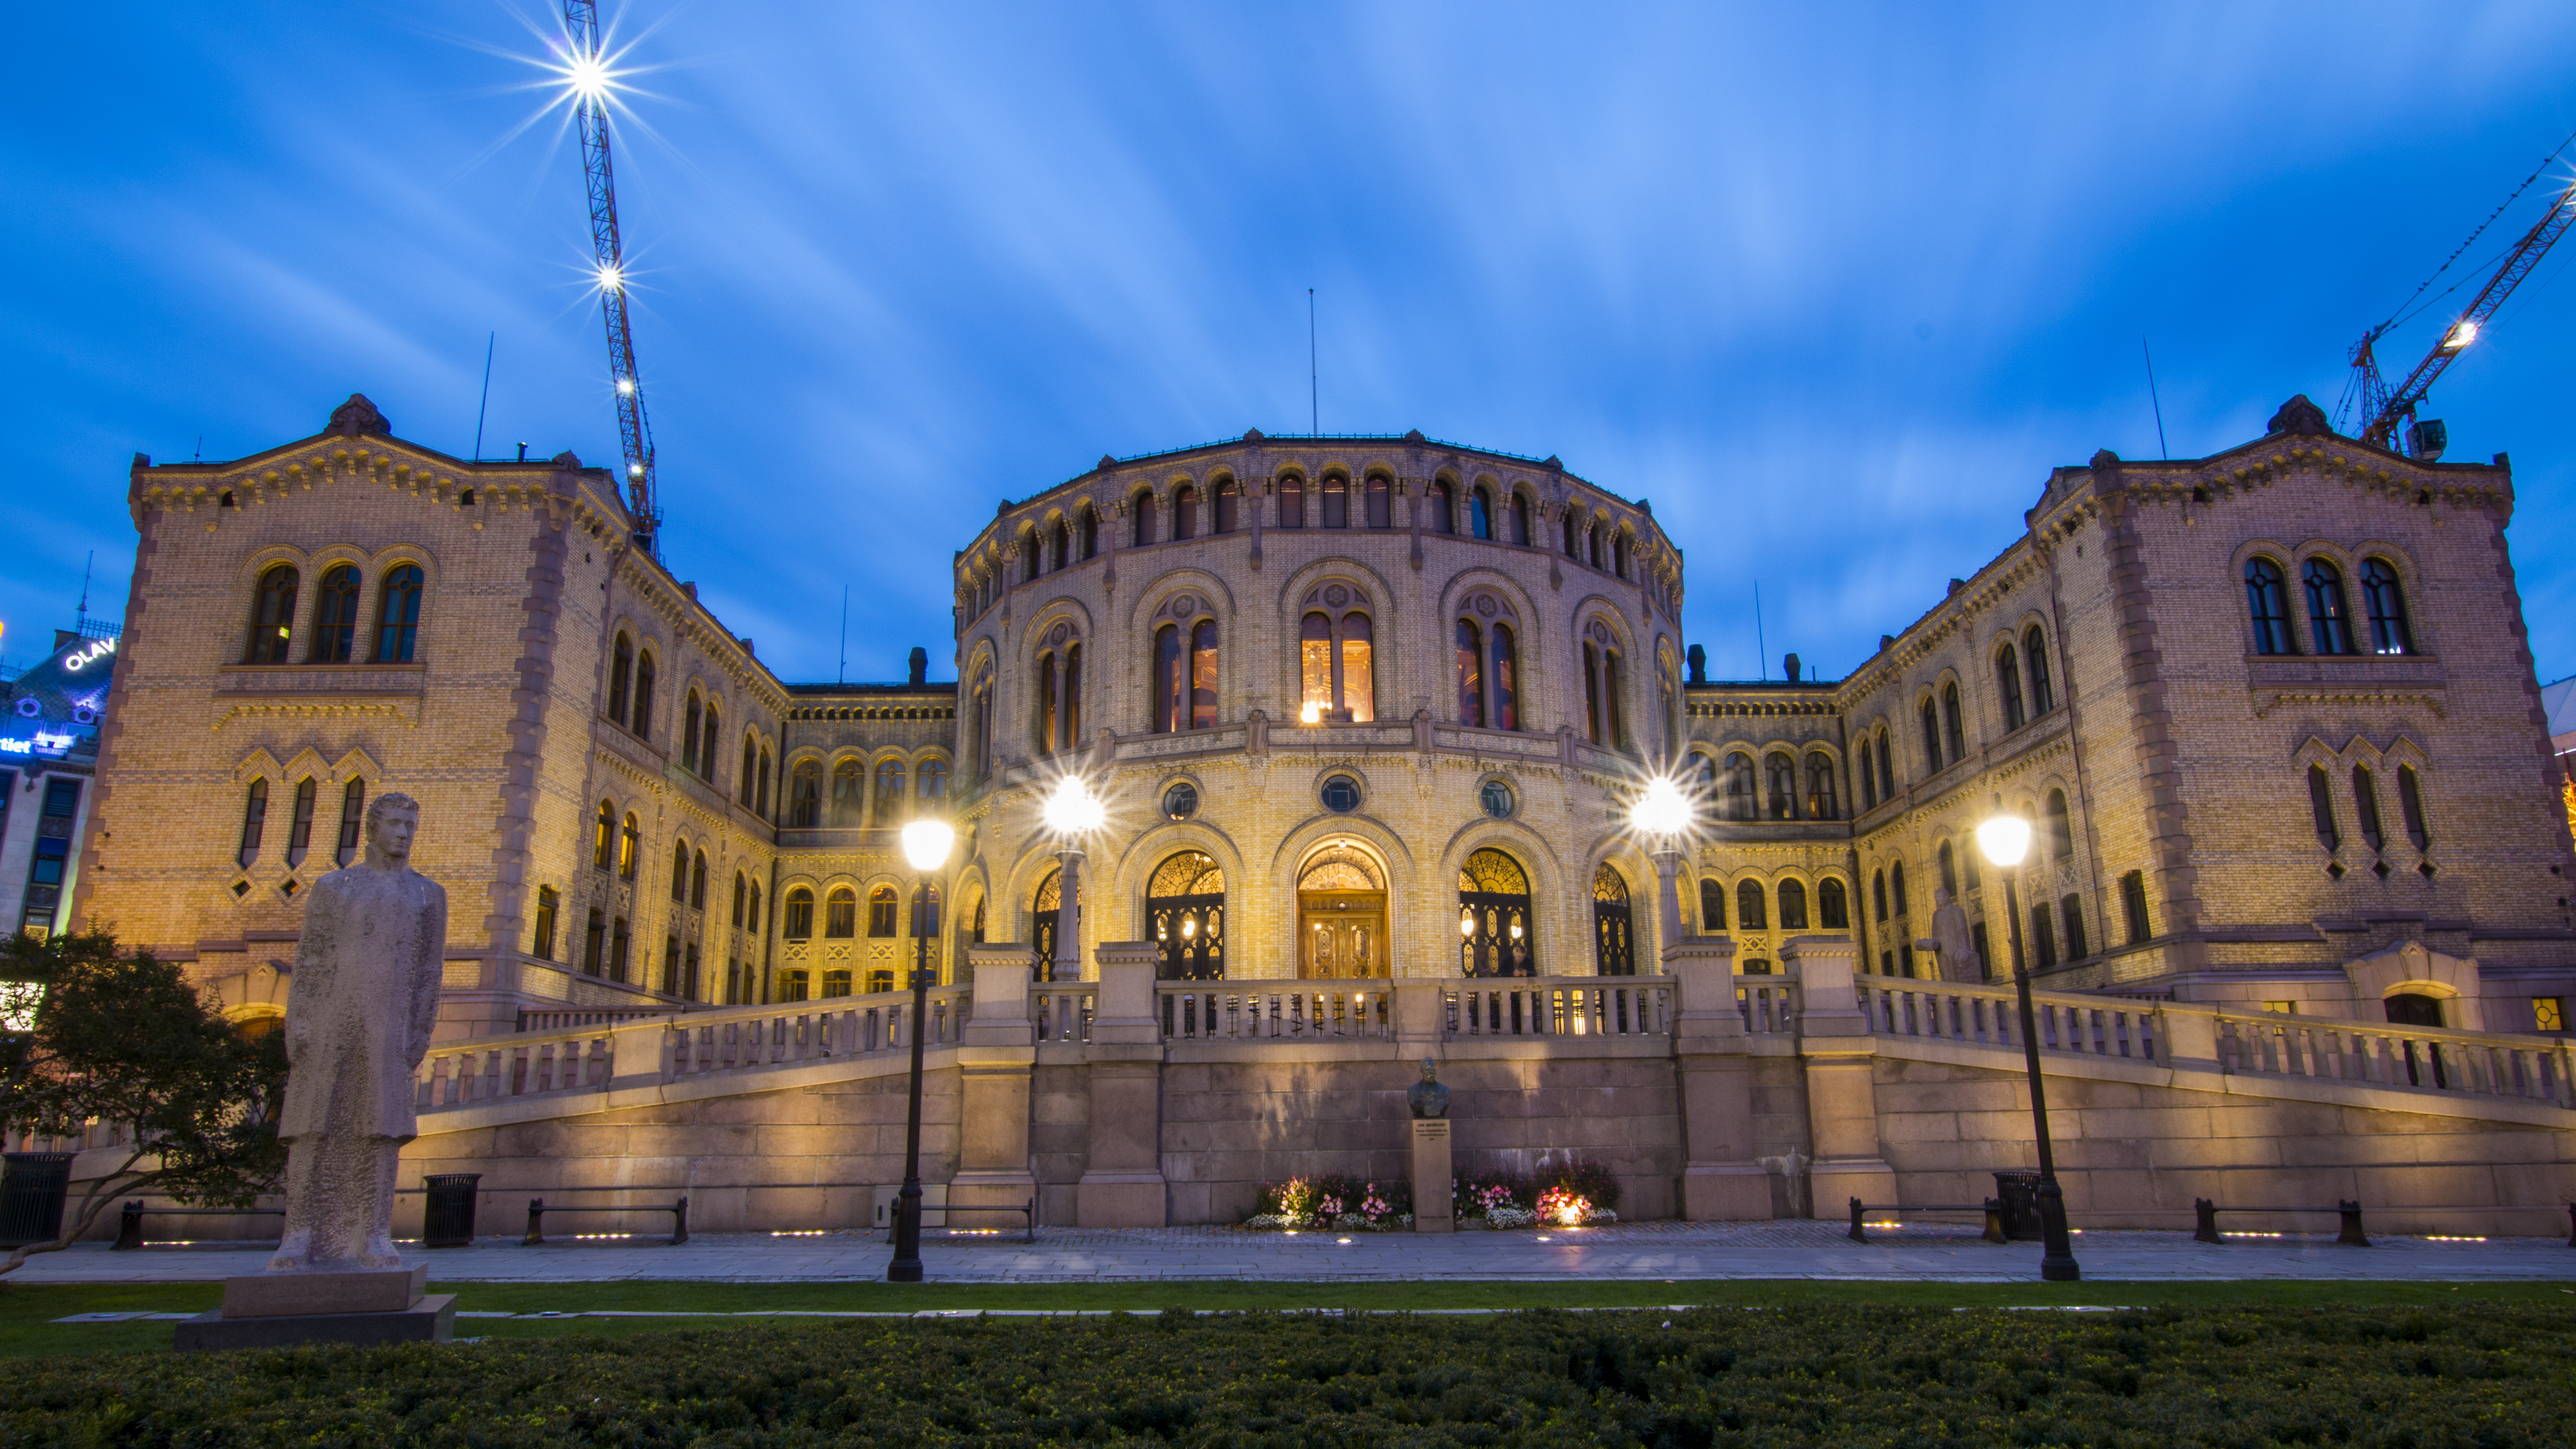 The parliament (Stortinget) at night.